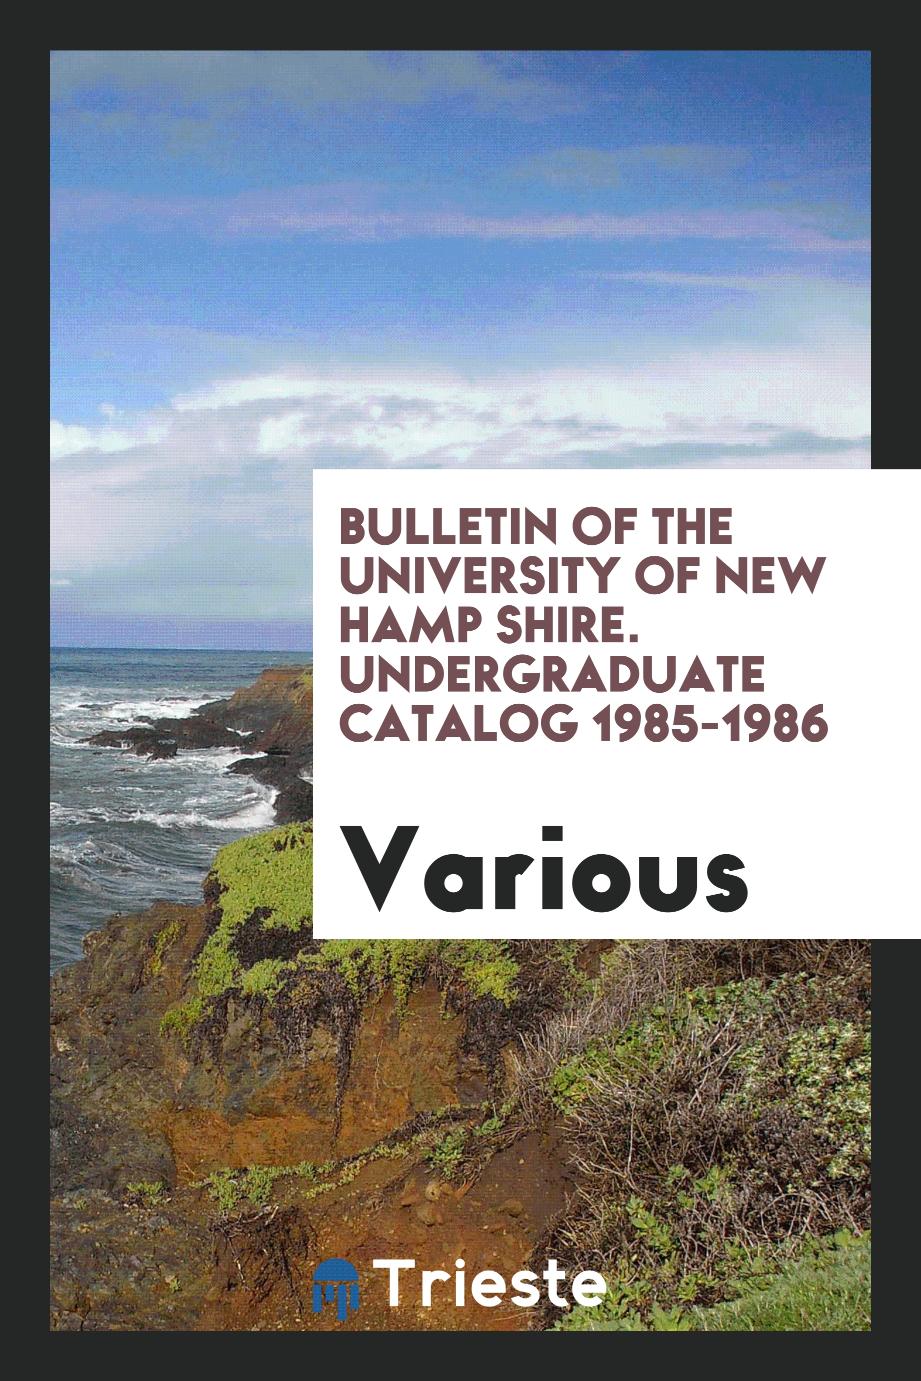 Bulletin of the University of New Hamp Shire. Undergraduate catalog 1985-1986